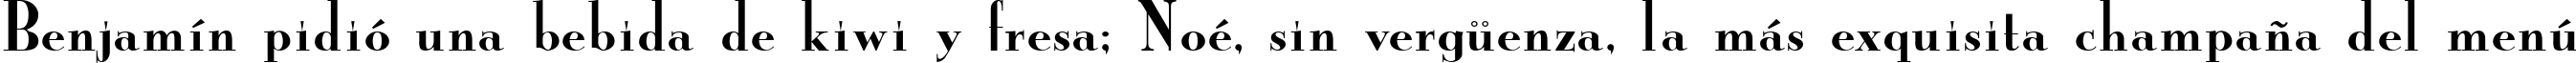 Пример написания шрифтом Mona Lisa SolidITC-Normal текста на испанском